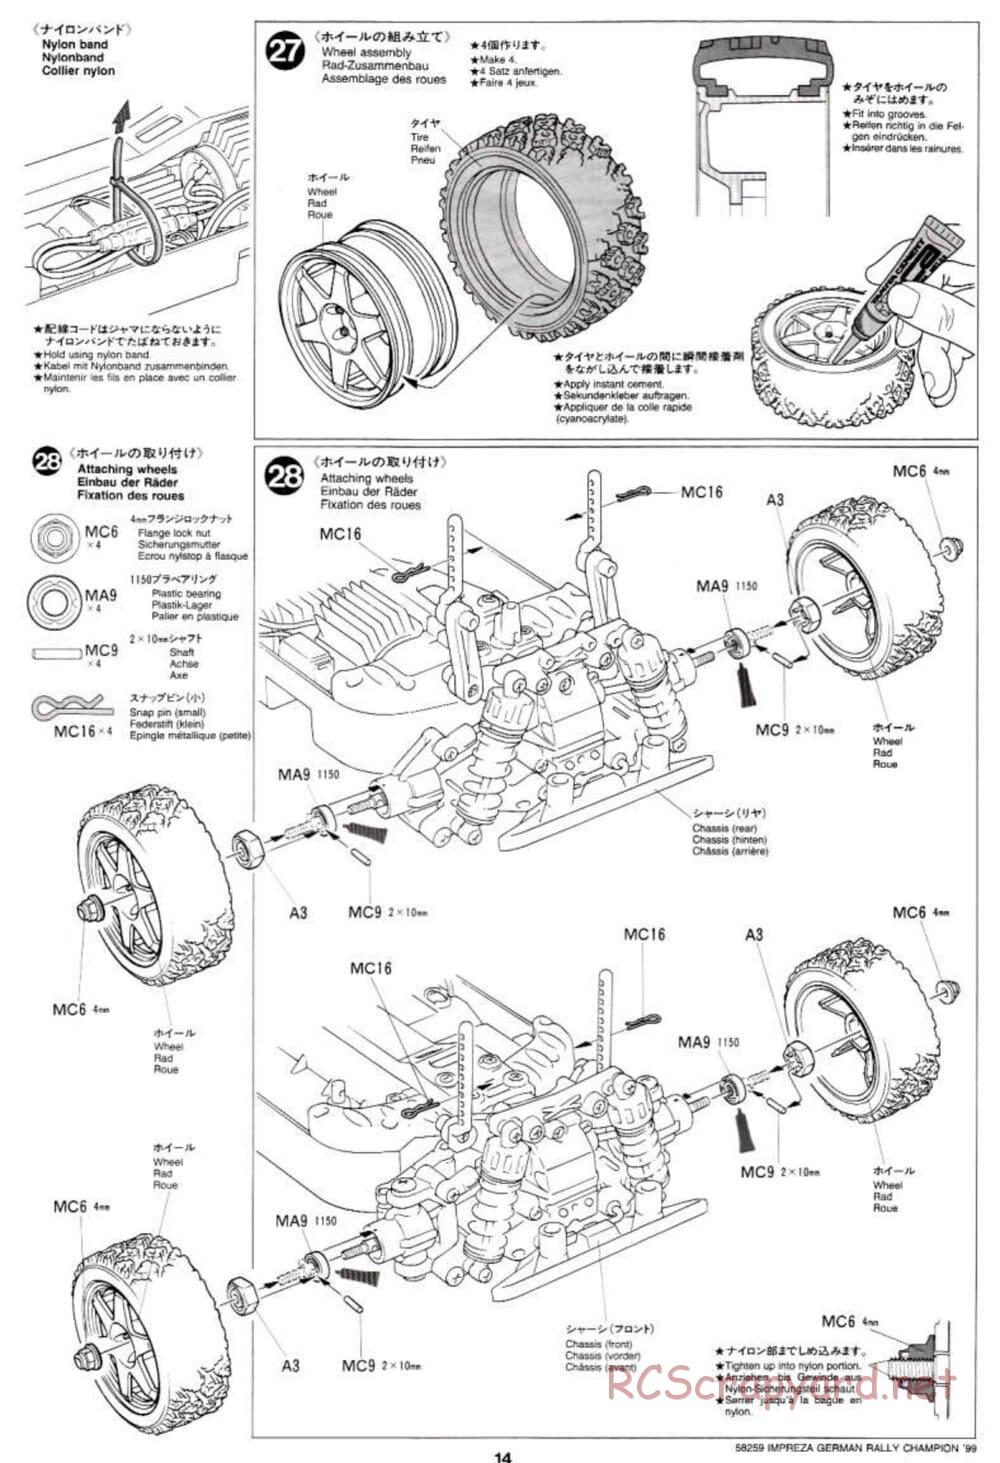 Tamiya - Subaru Impreza German Rally Champion 99 - TB-01 Chassis - Manual - Page 14